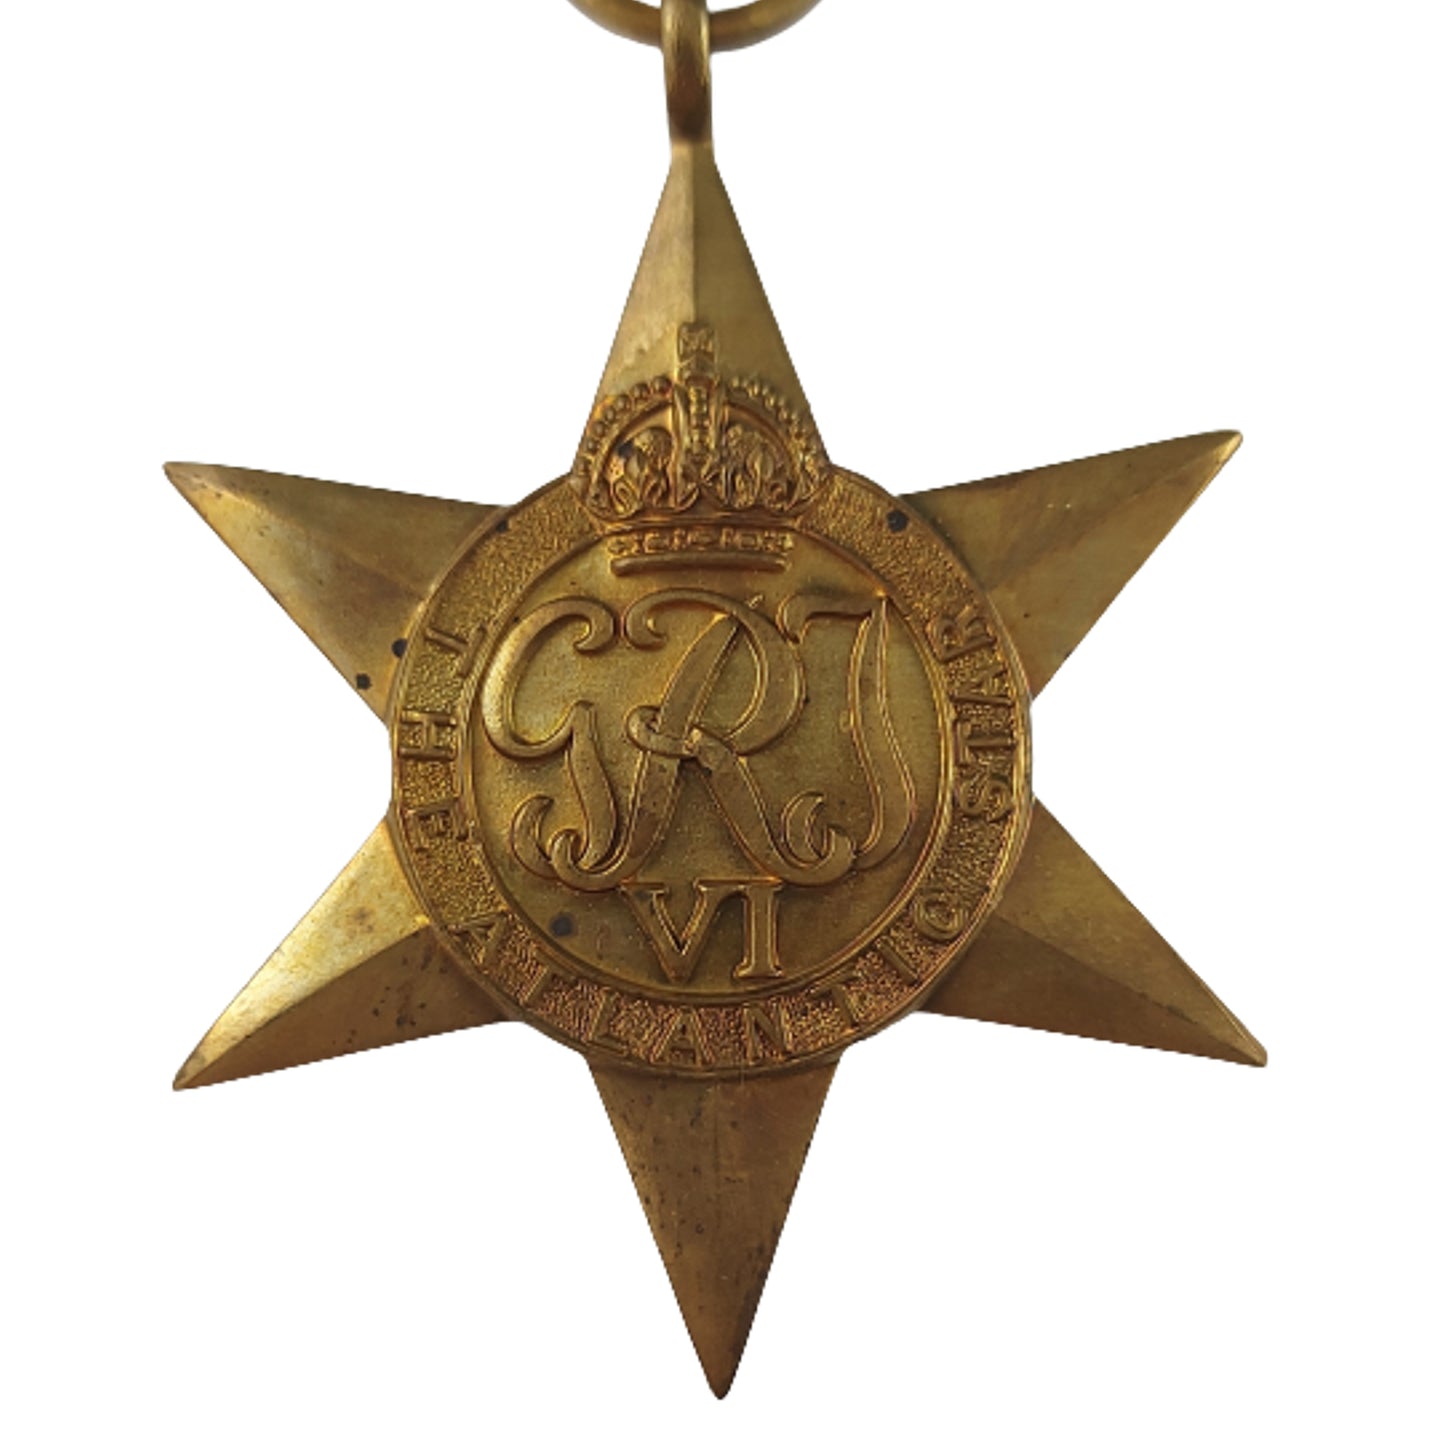 WW2 Canadian Atlantic Star Medal